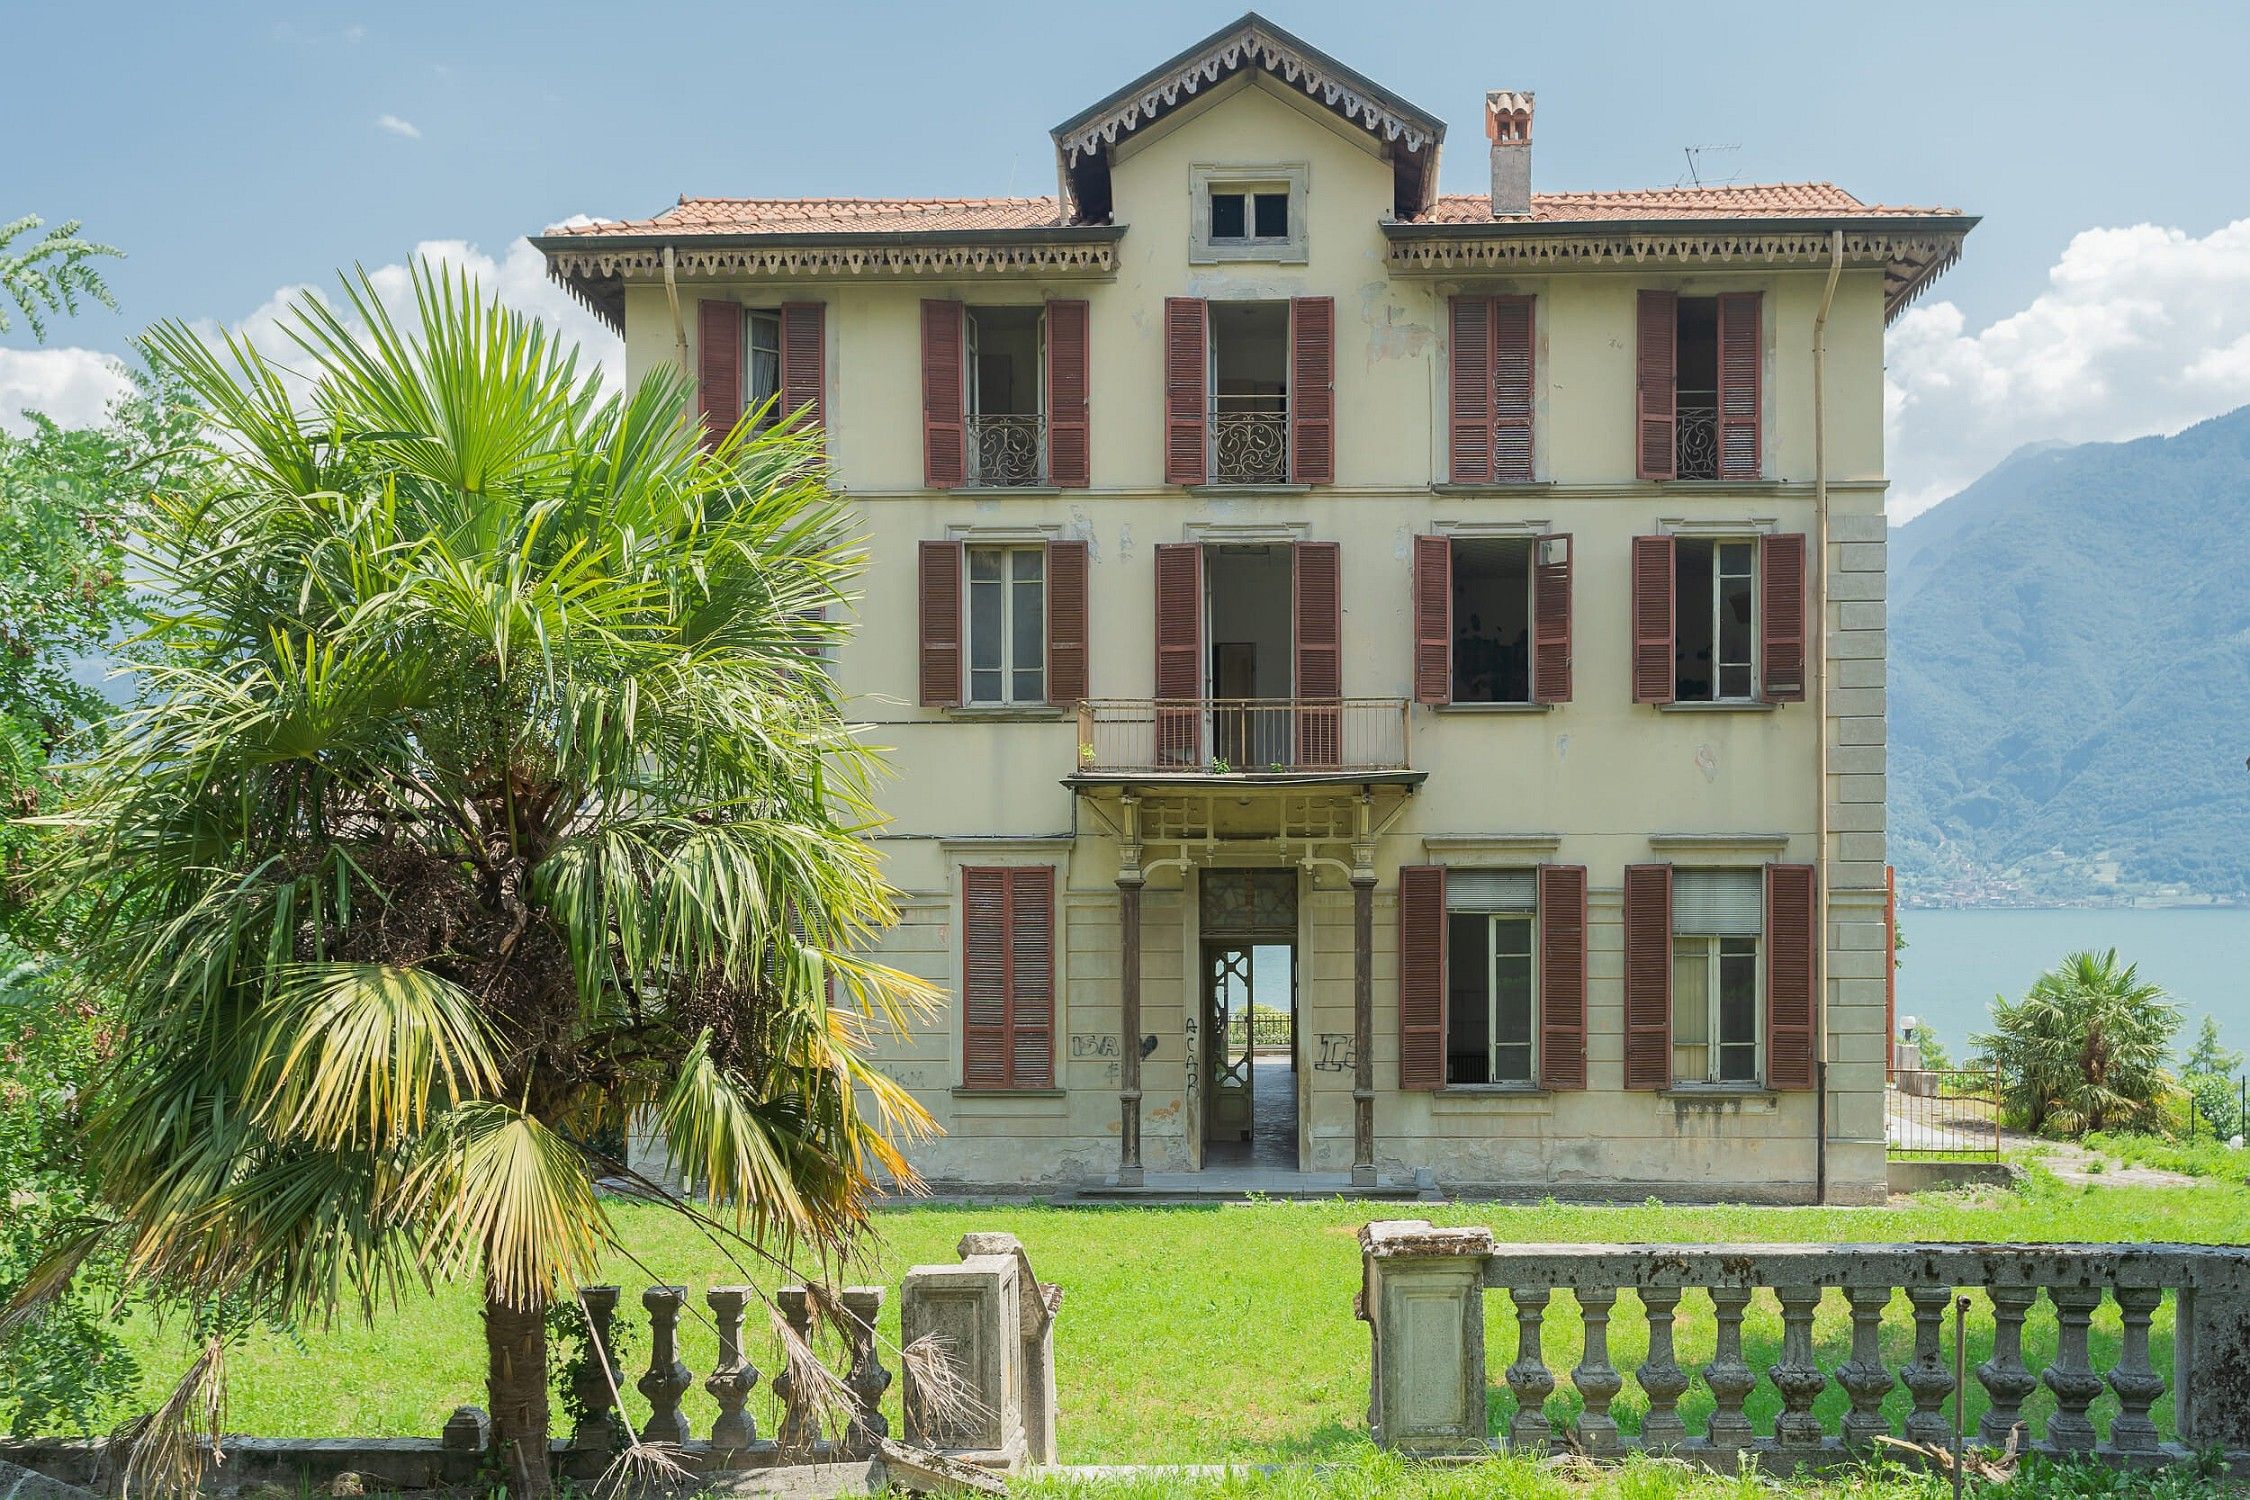 Images Betoverende historische villa in Lovere - Lago d'Iseo